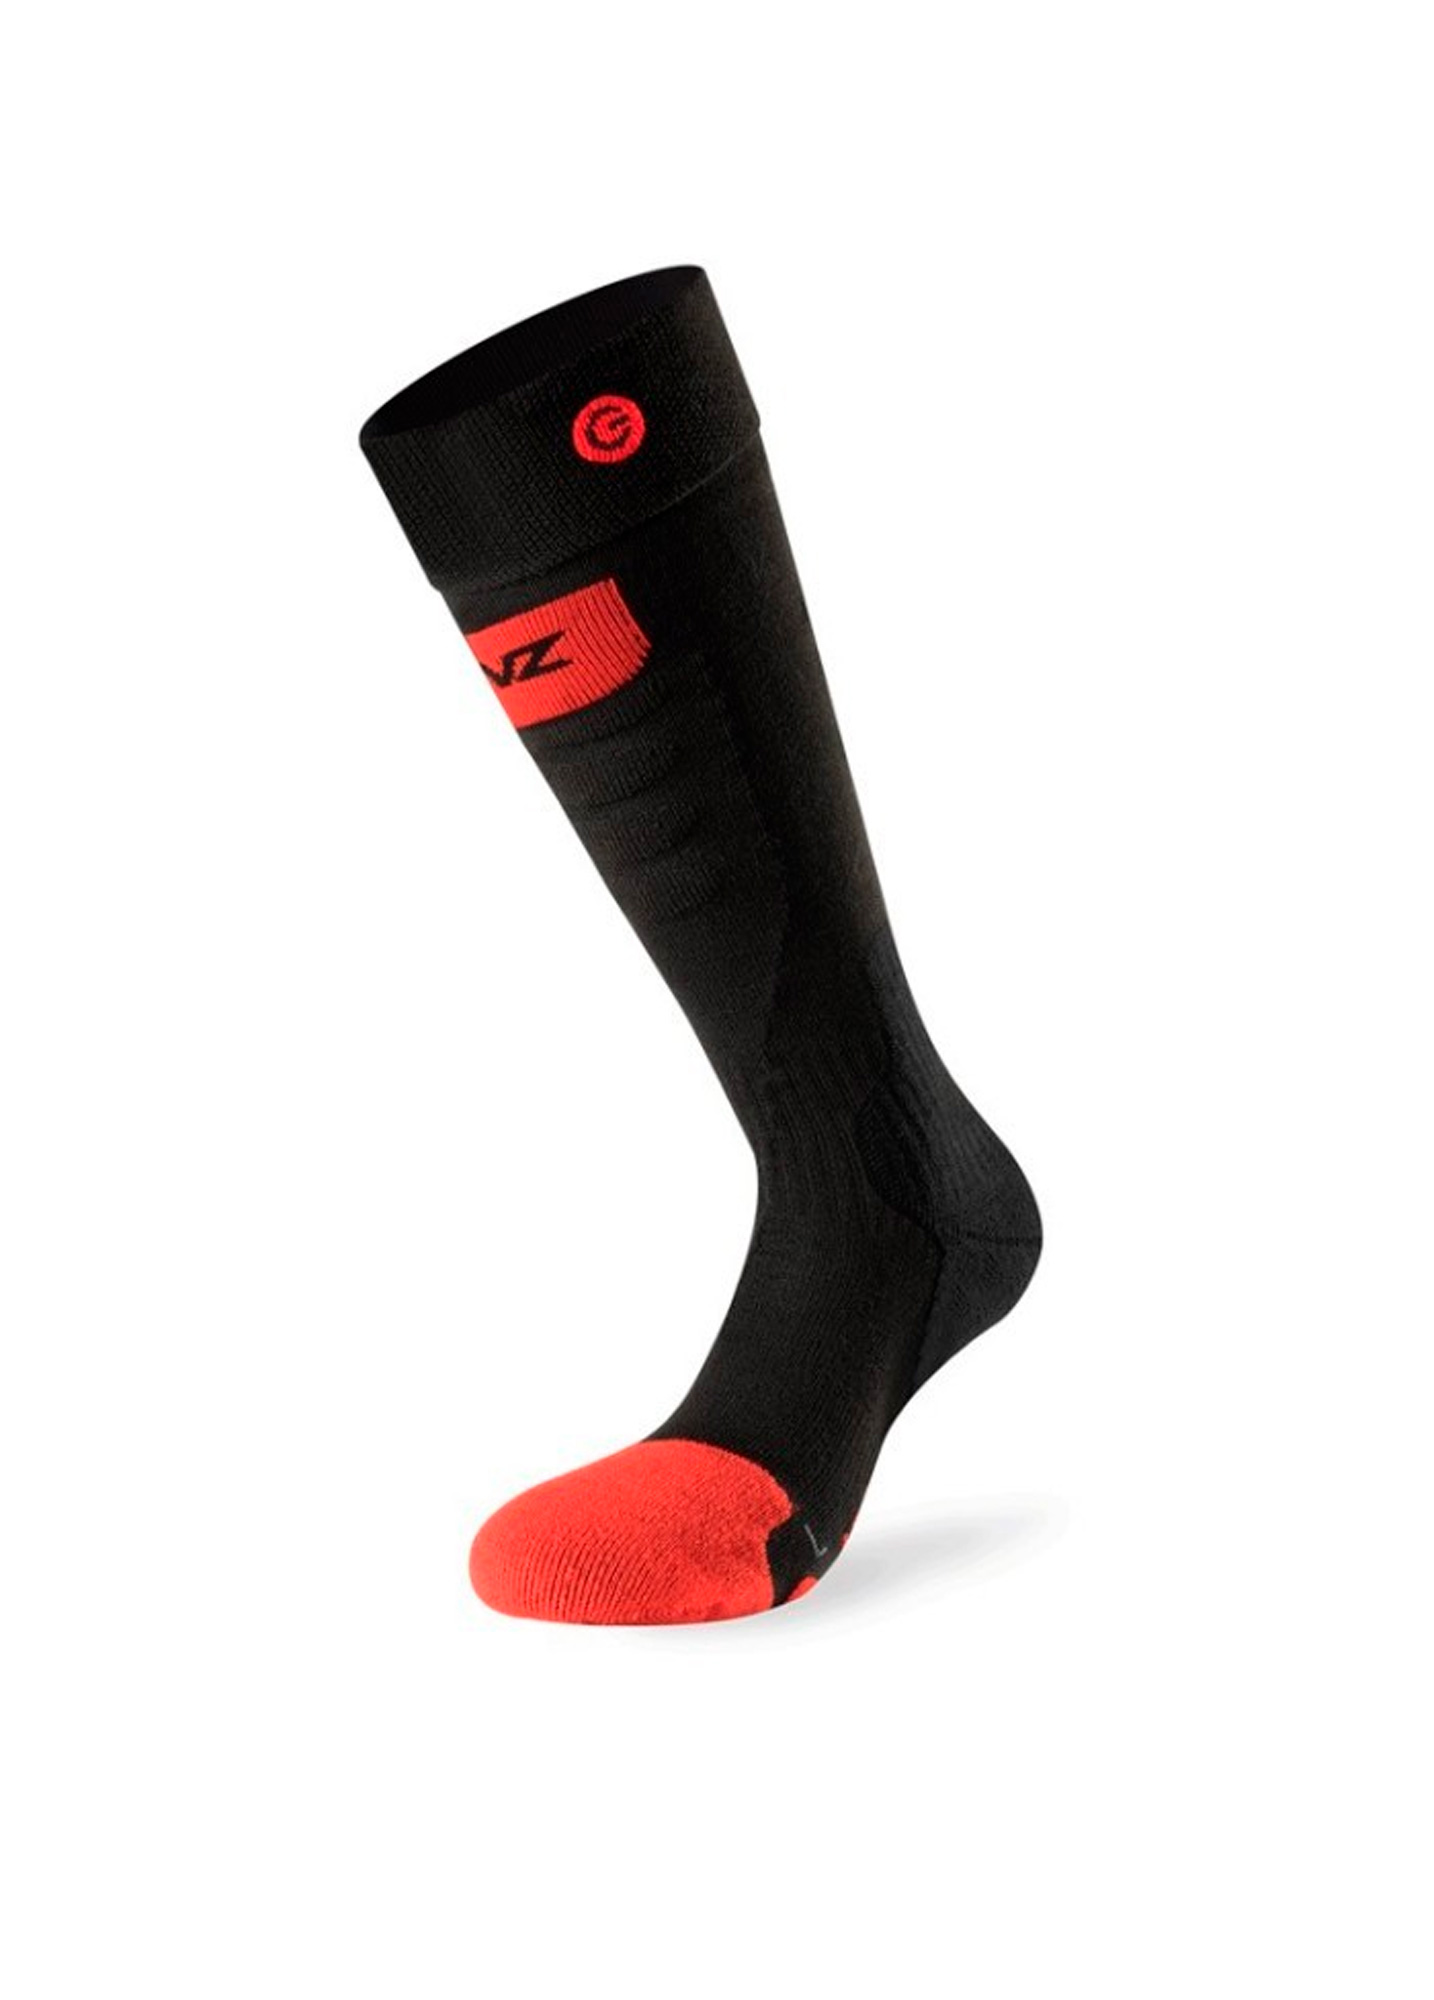 Lenz Heat Sock 5.0 Toe Cap heat socks - Äkäslompolo